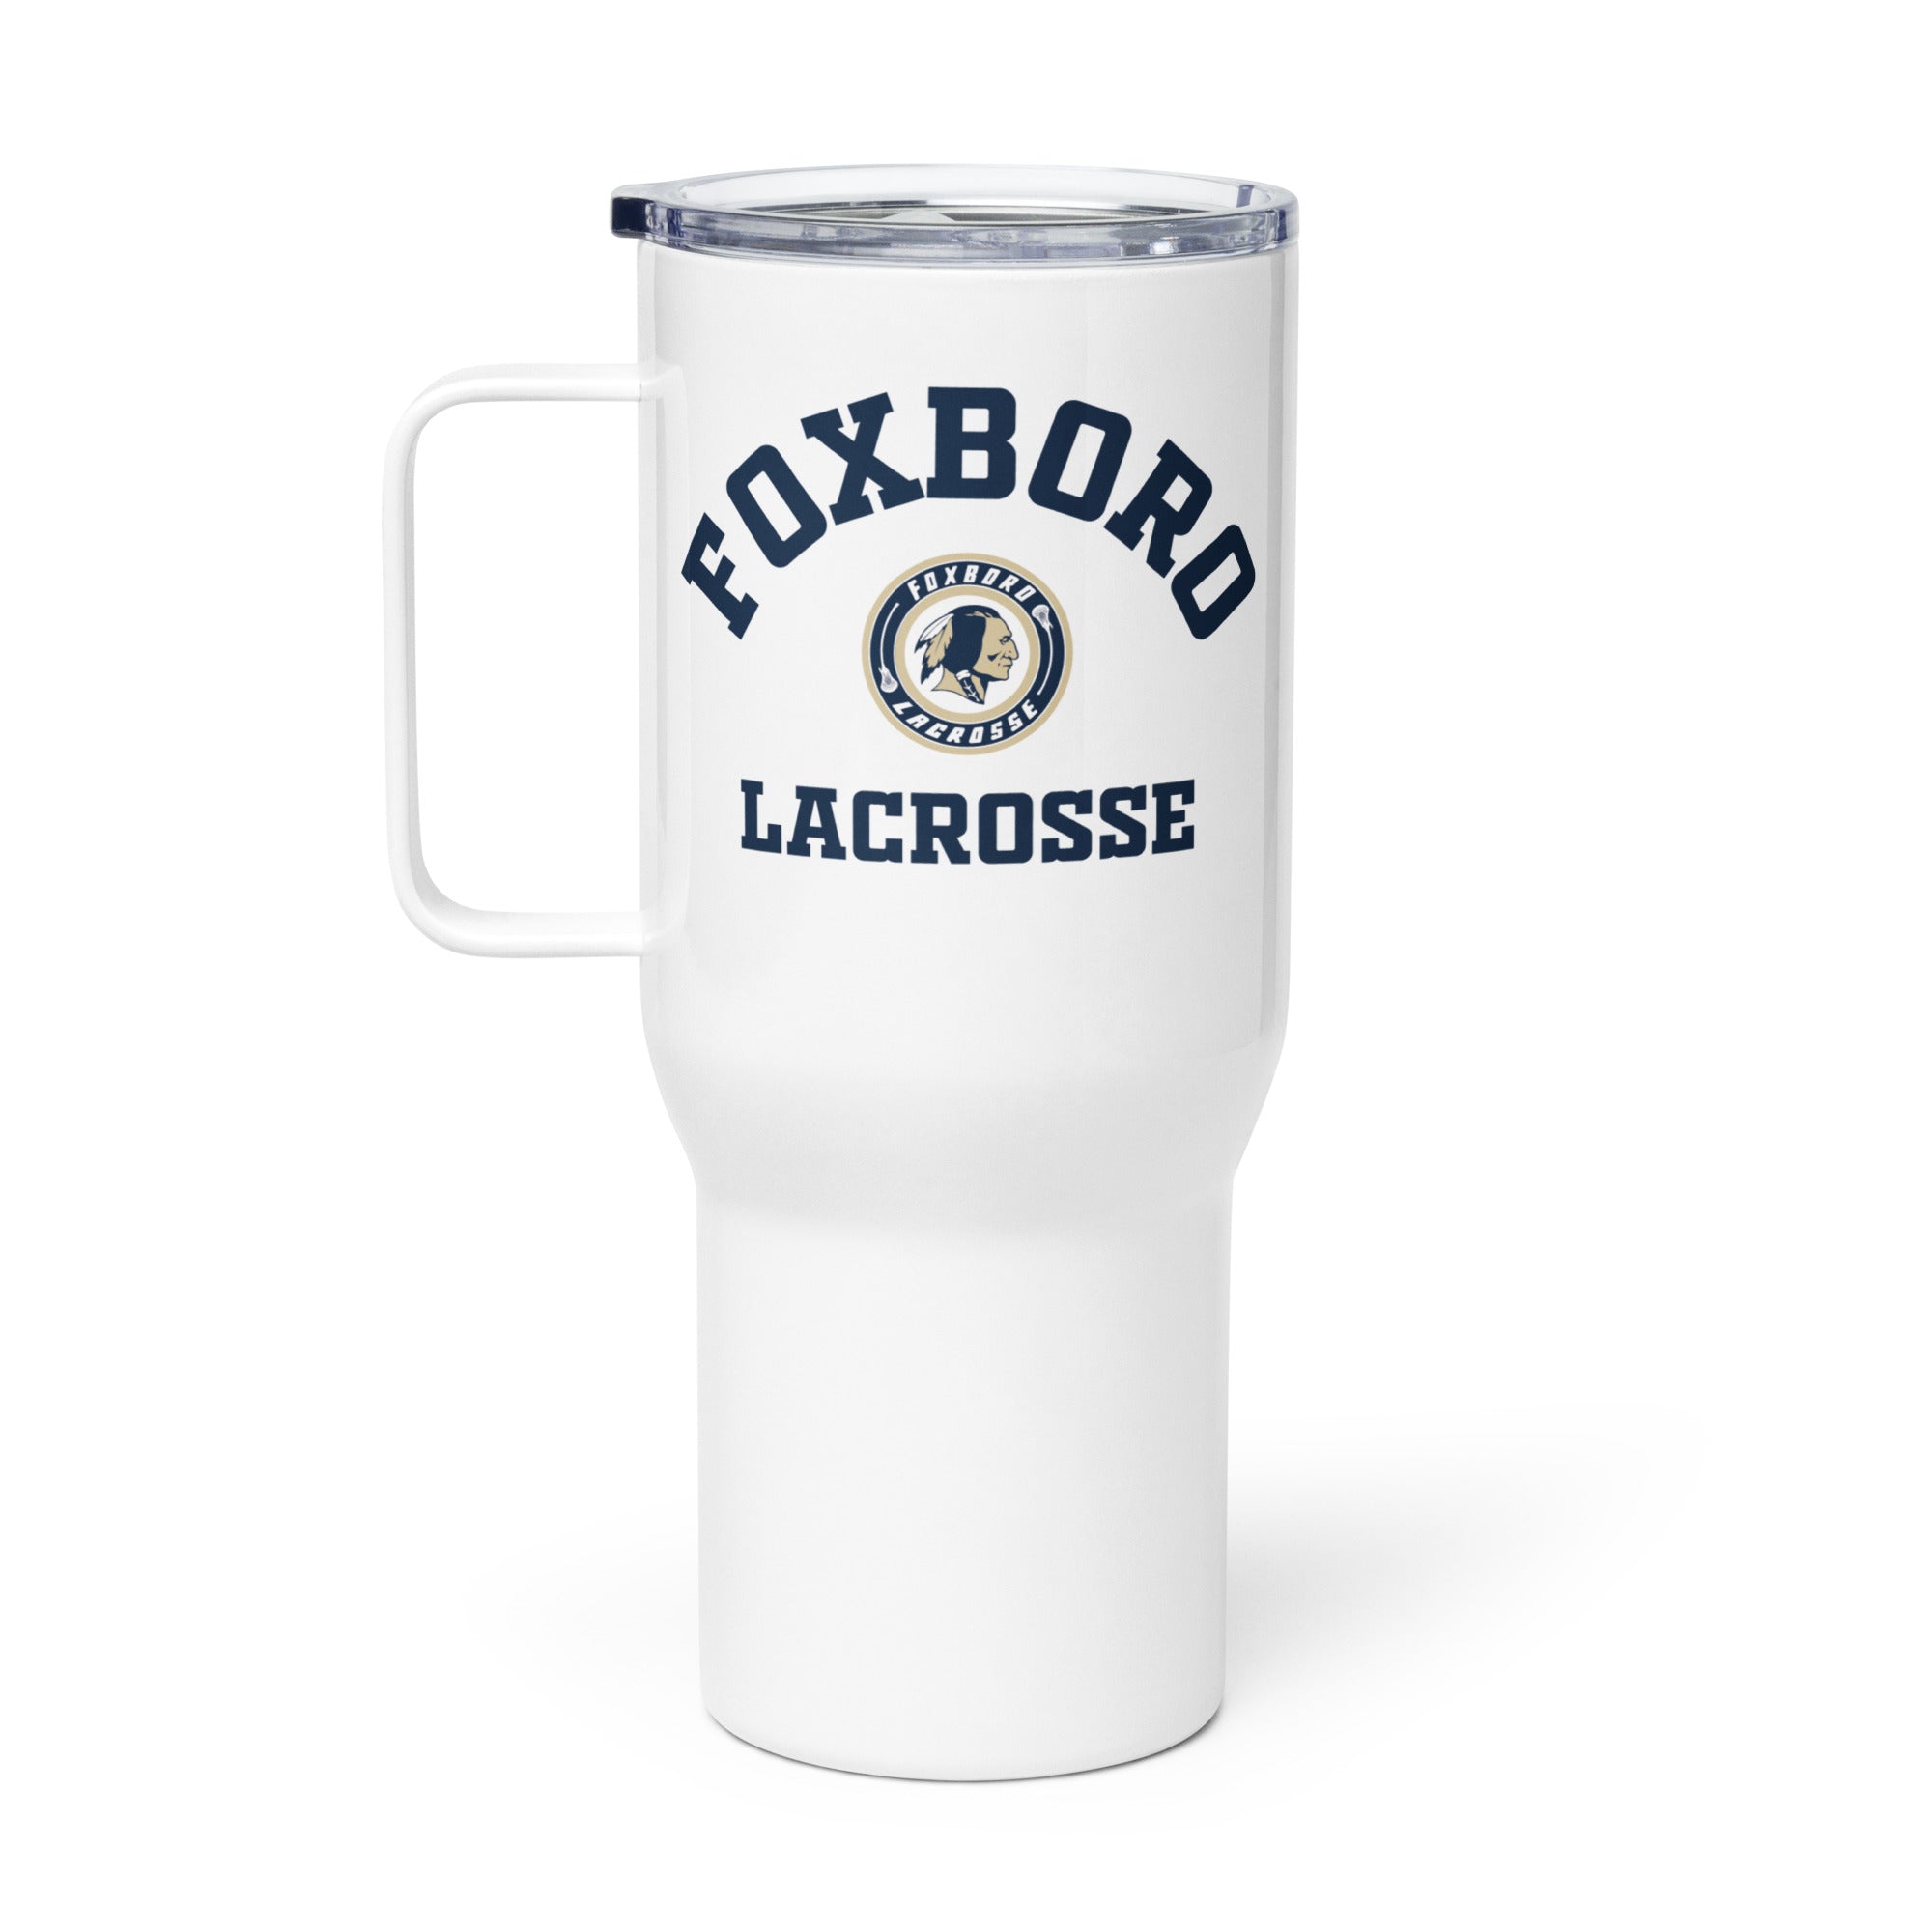 Foxboro Travel mug with a handle